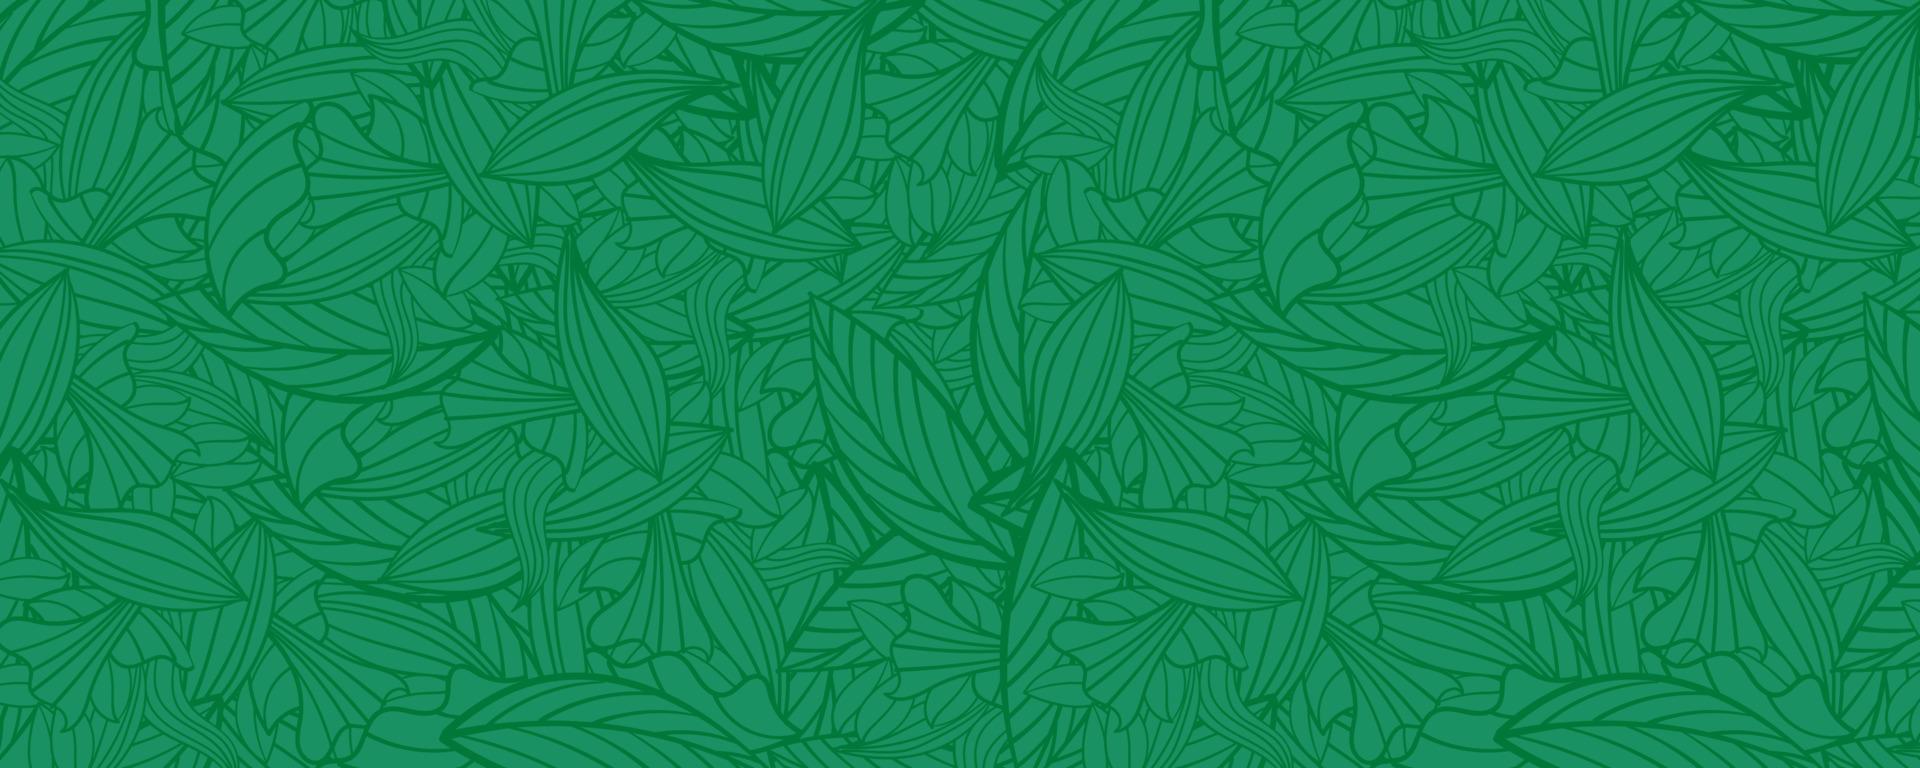 Abstract  green leaf floral pattern vector background illustration